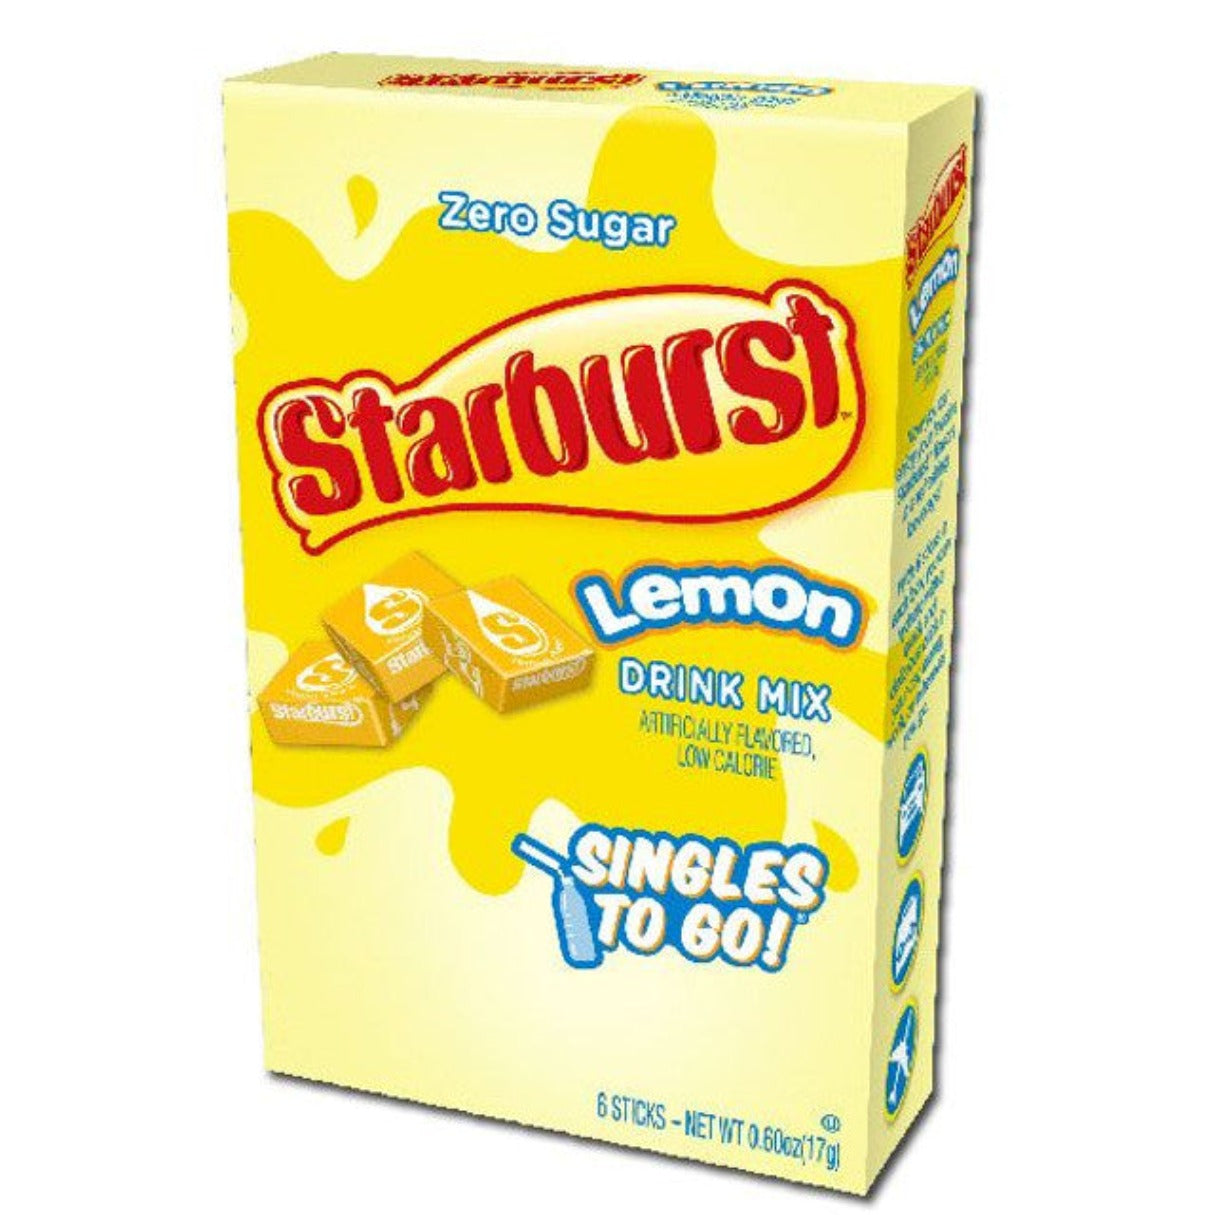 Starburst Singles To Go Zero Sugar Drink Mix, Lemon 0.60oz - 12ct